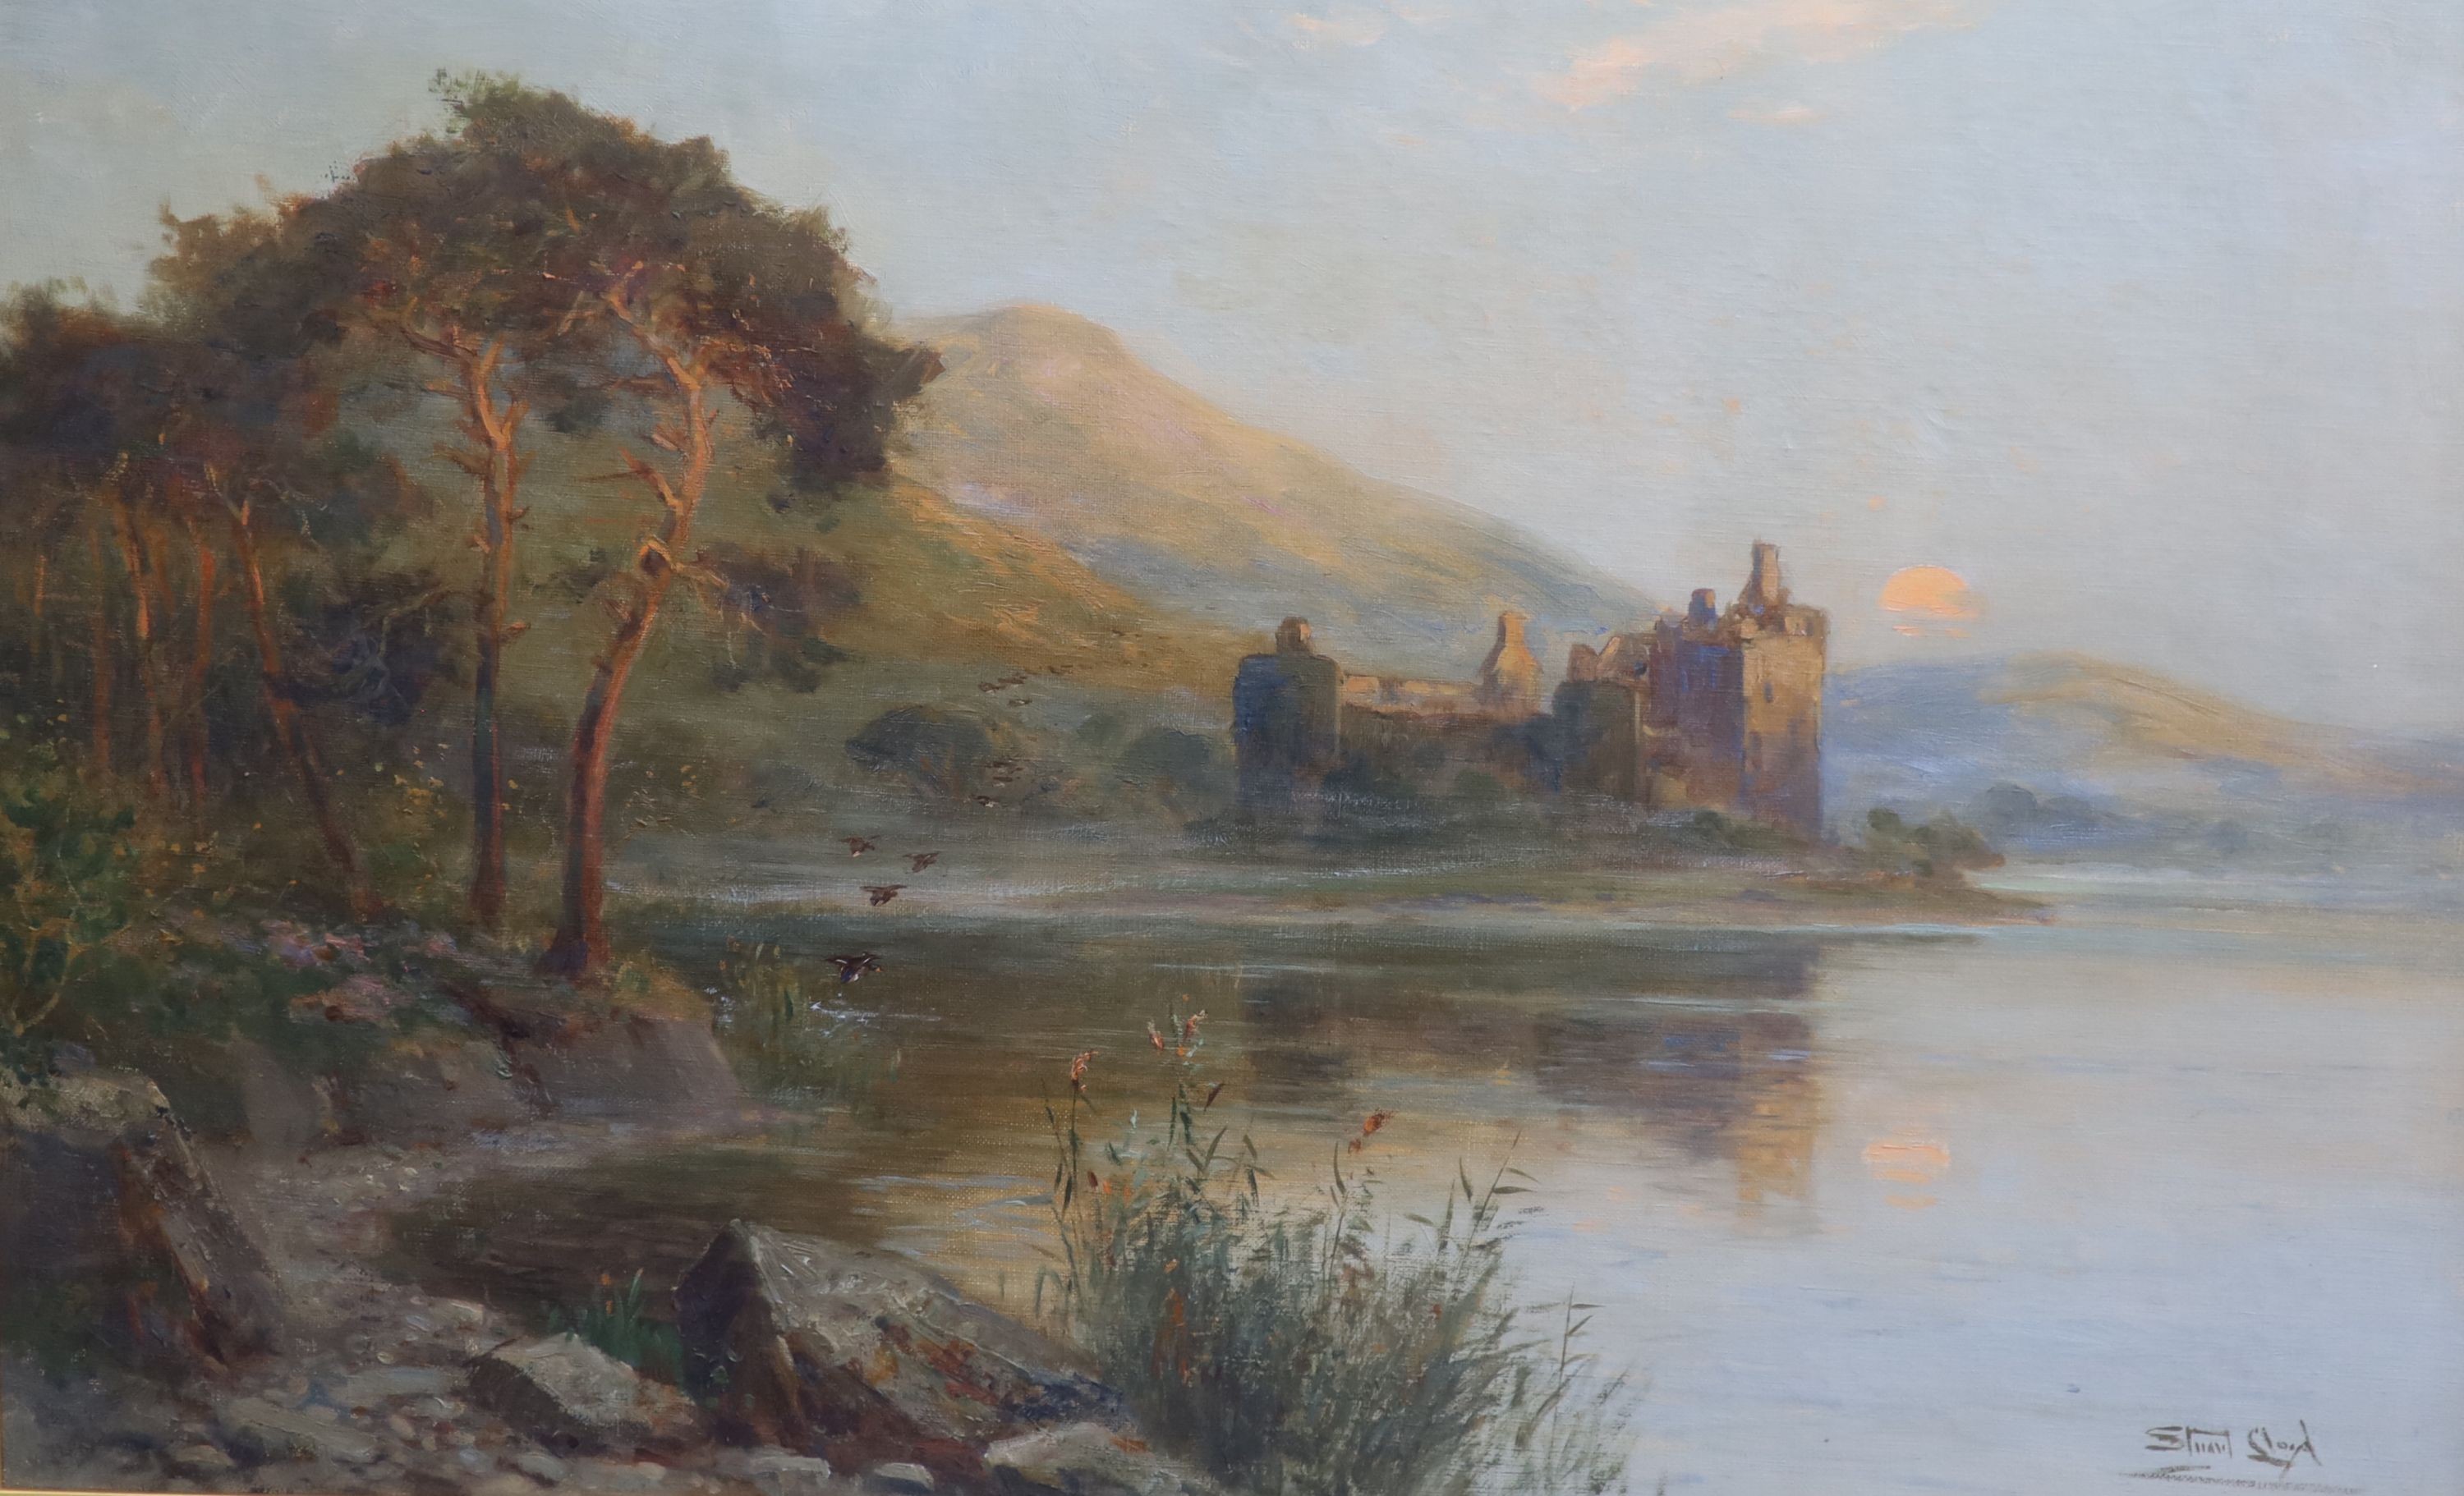 Stuart Lloyd (1875-1929), oil on canvas, Kilchurn Castle, Scotland, signed, 49 x 74cm